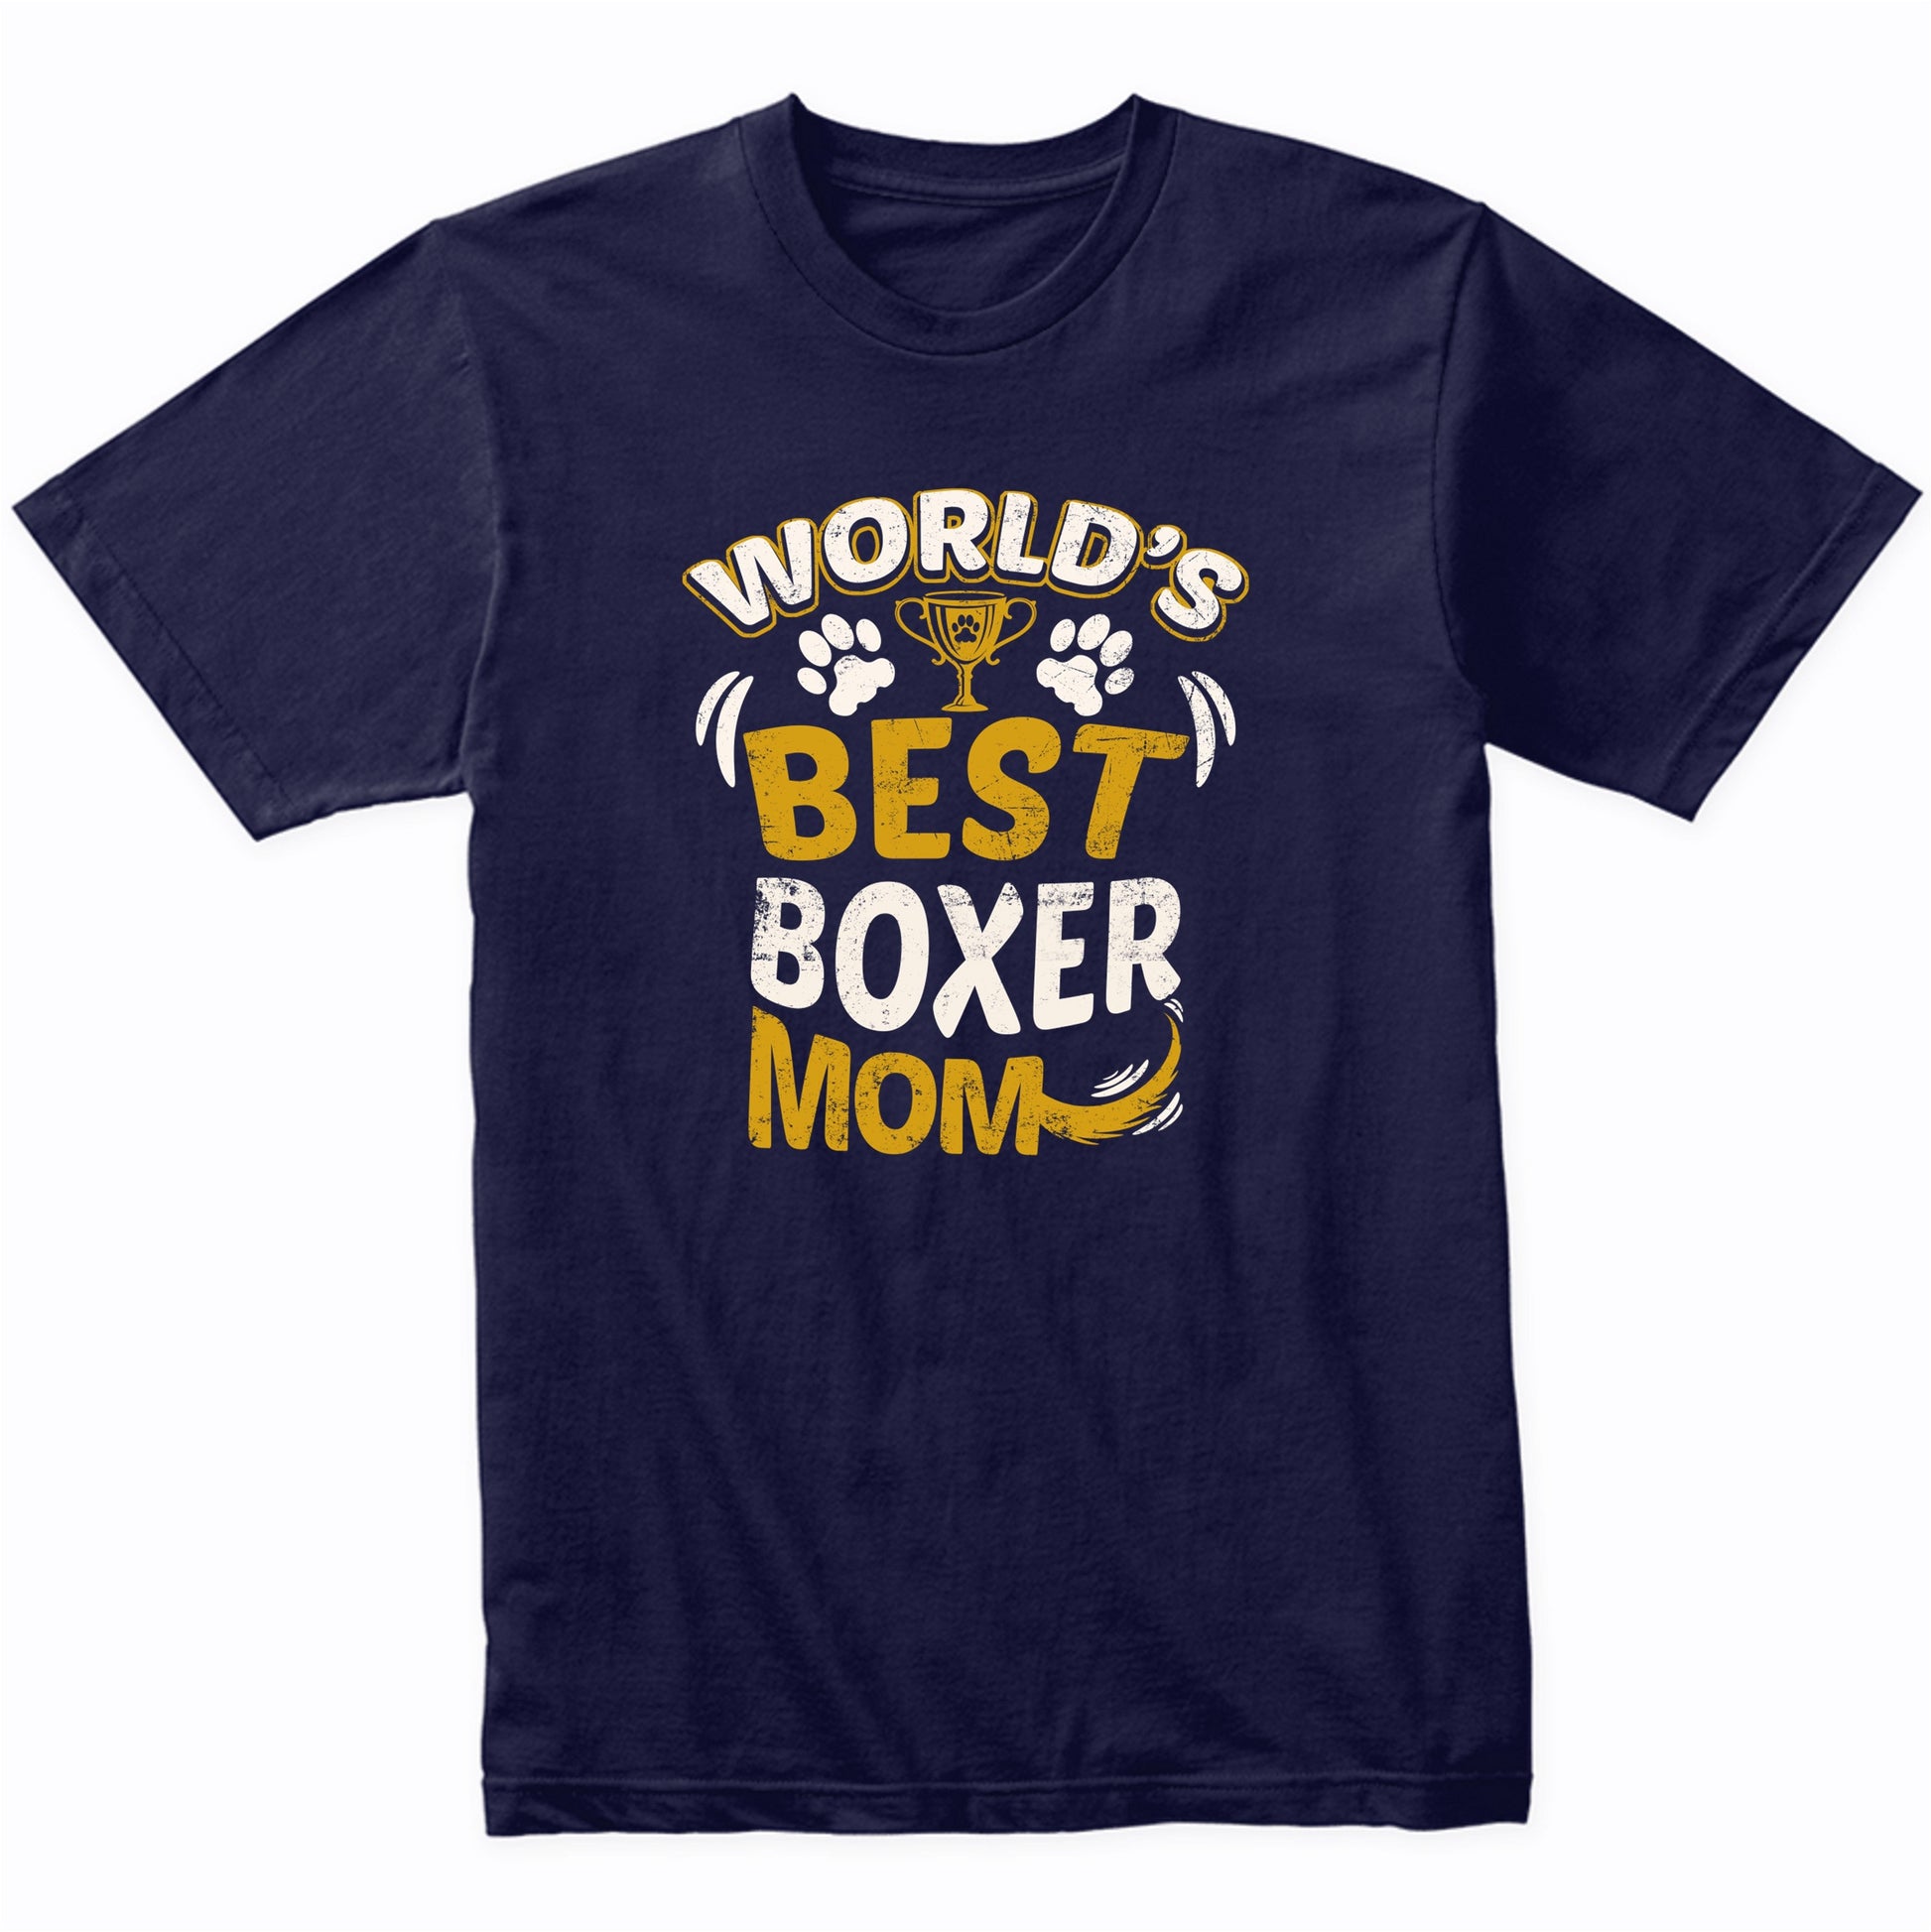 World's Best Boxer Mom Graphic T-Shirt